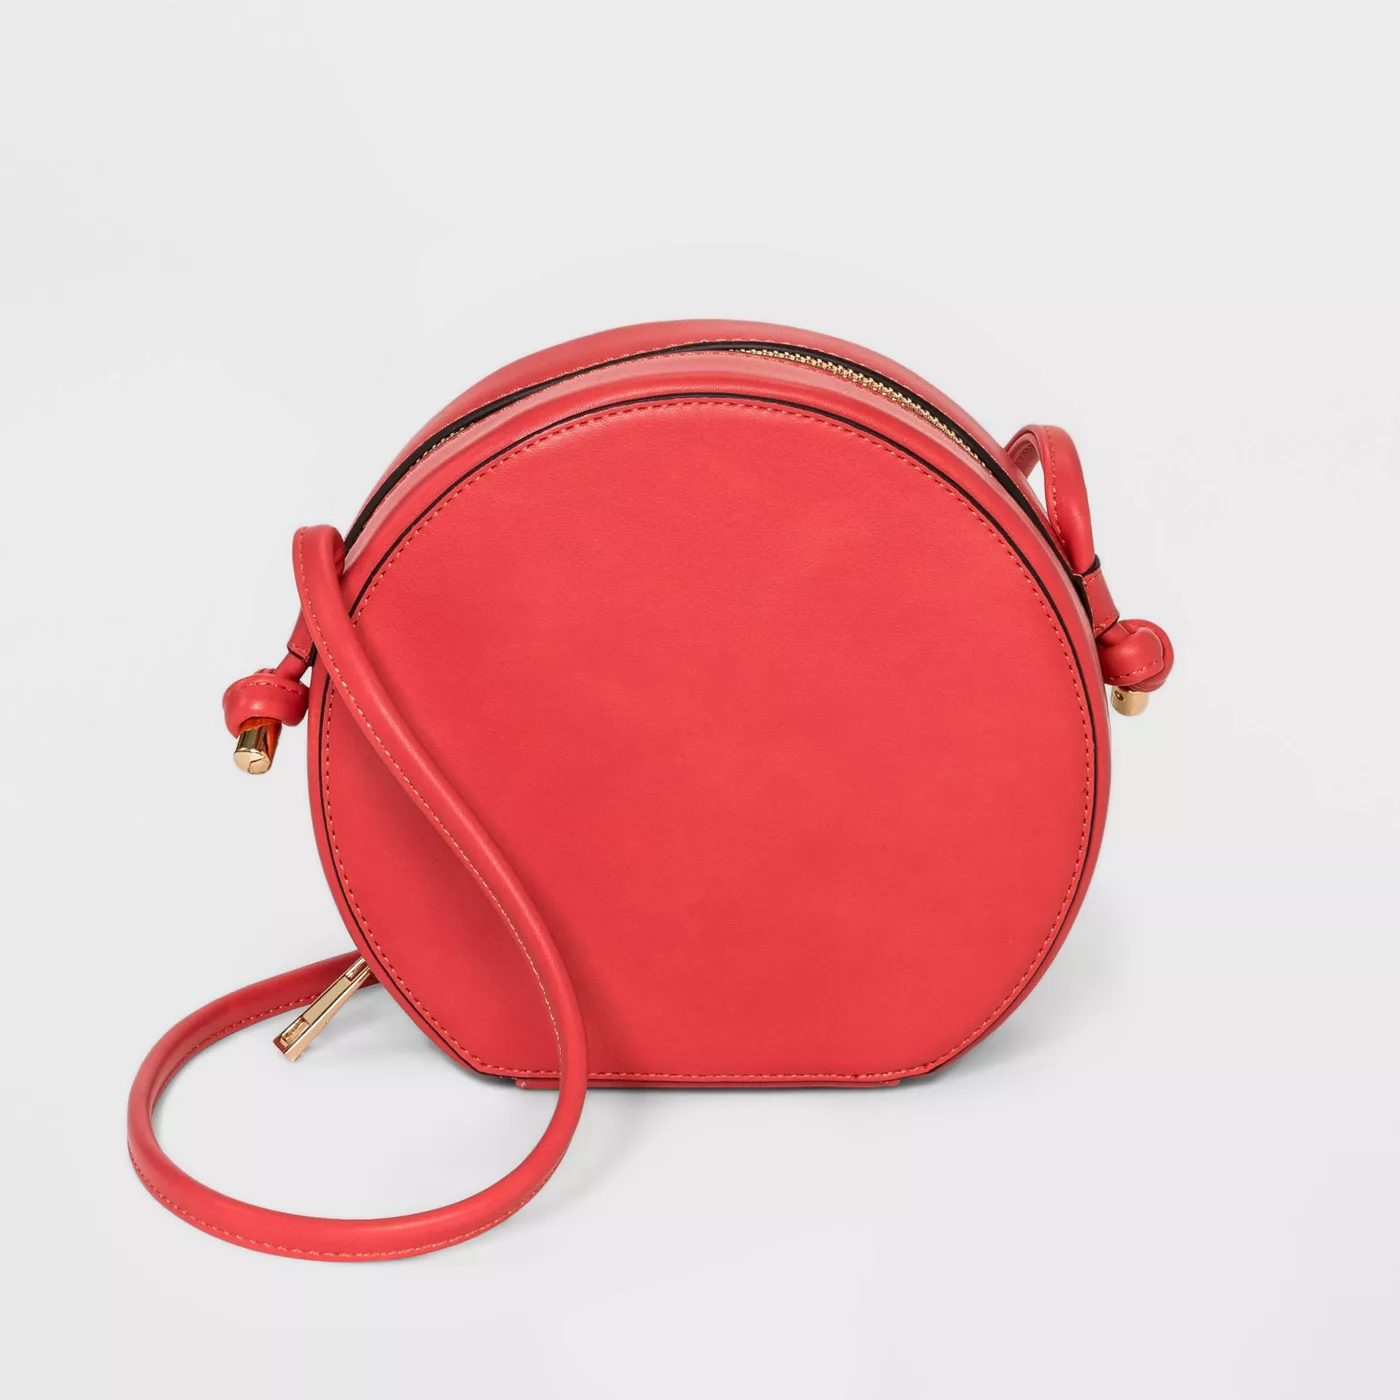 7 Beautiful Handbags for Fall and Winter - Society19